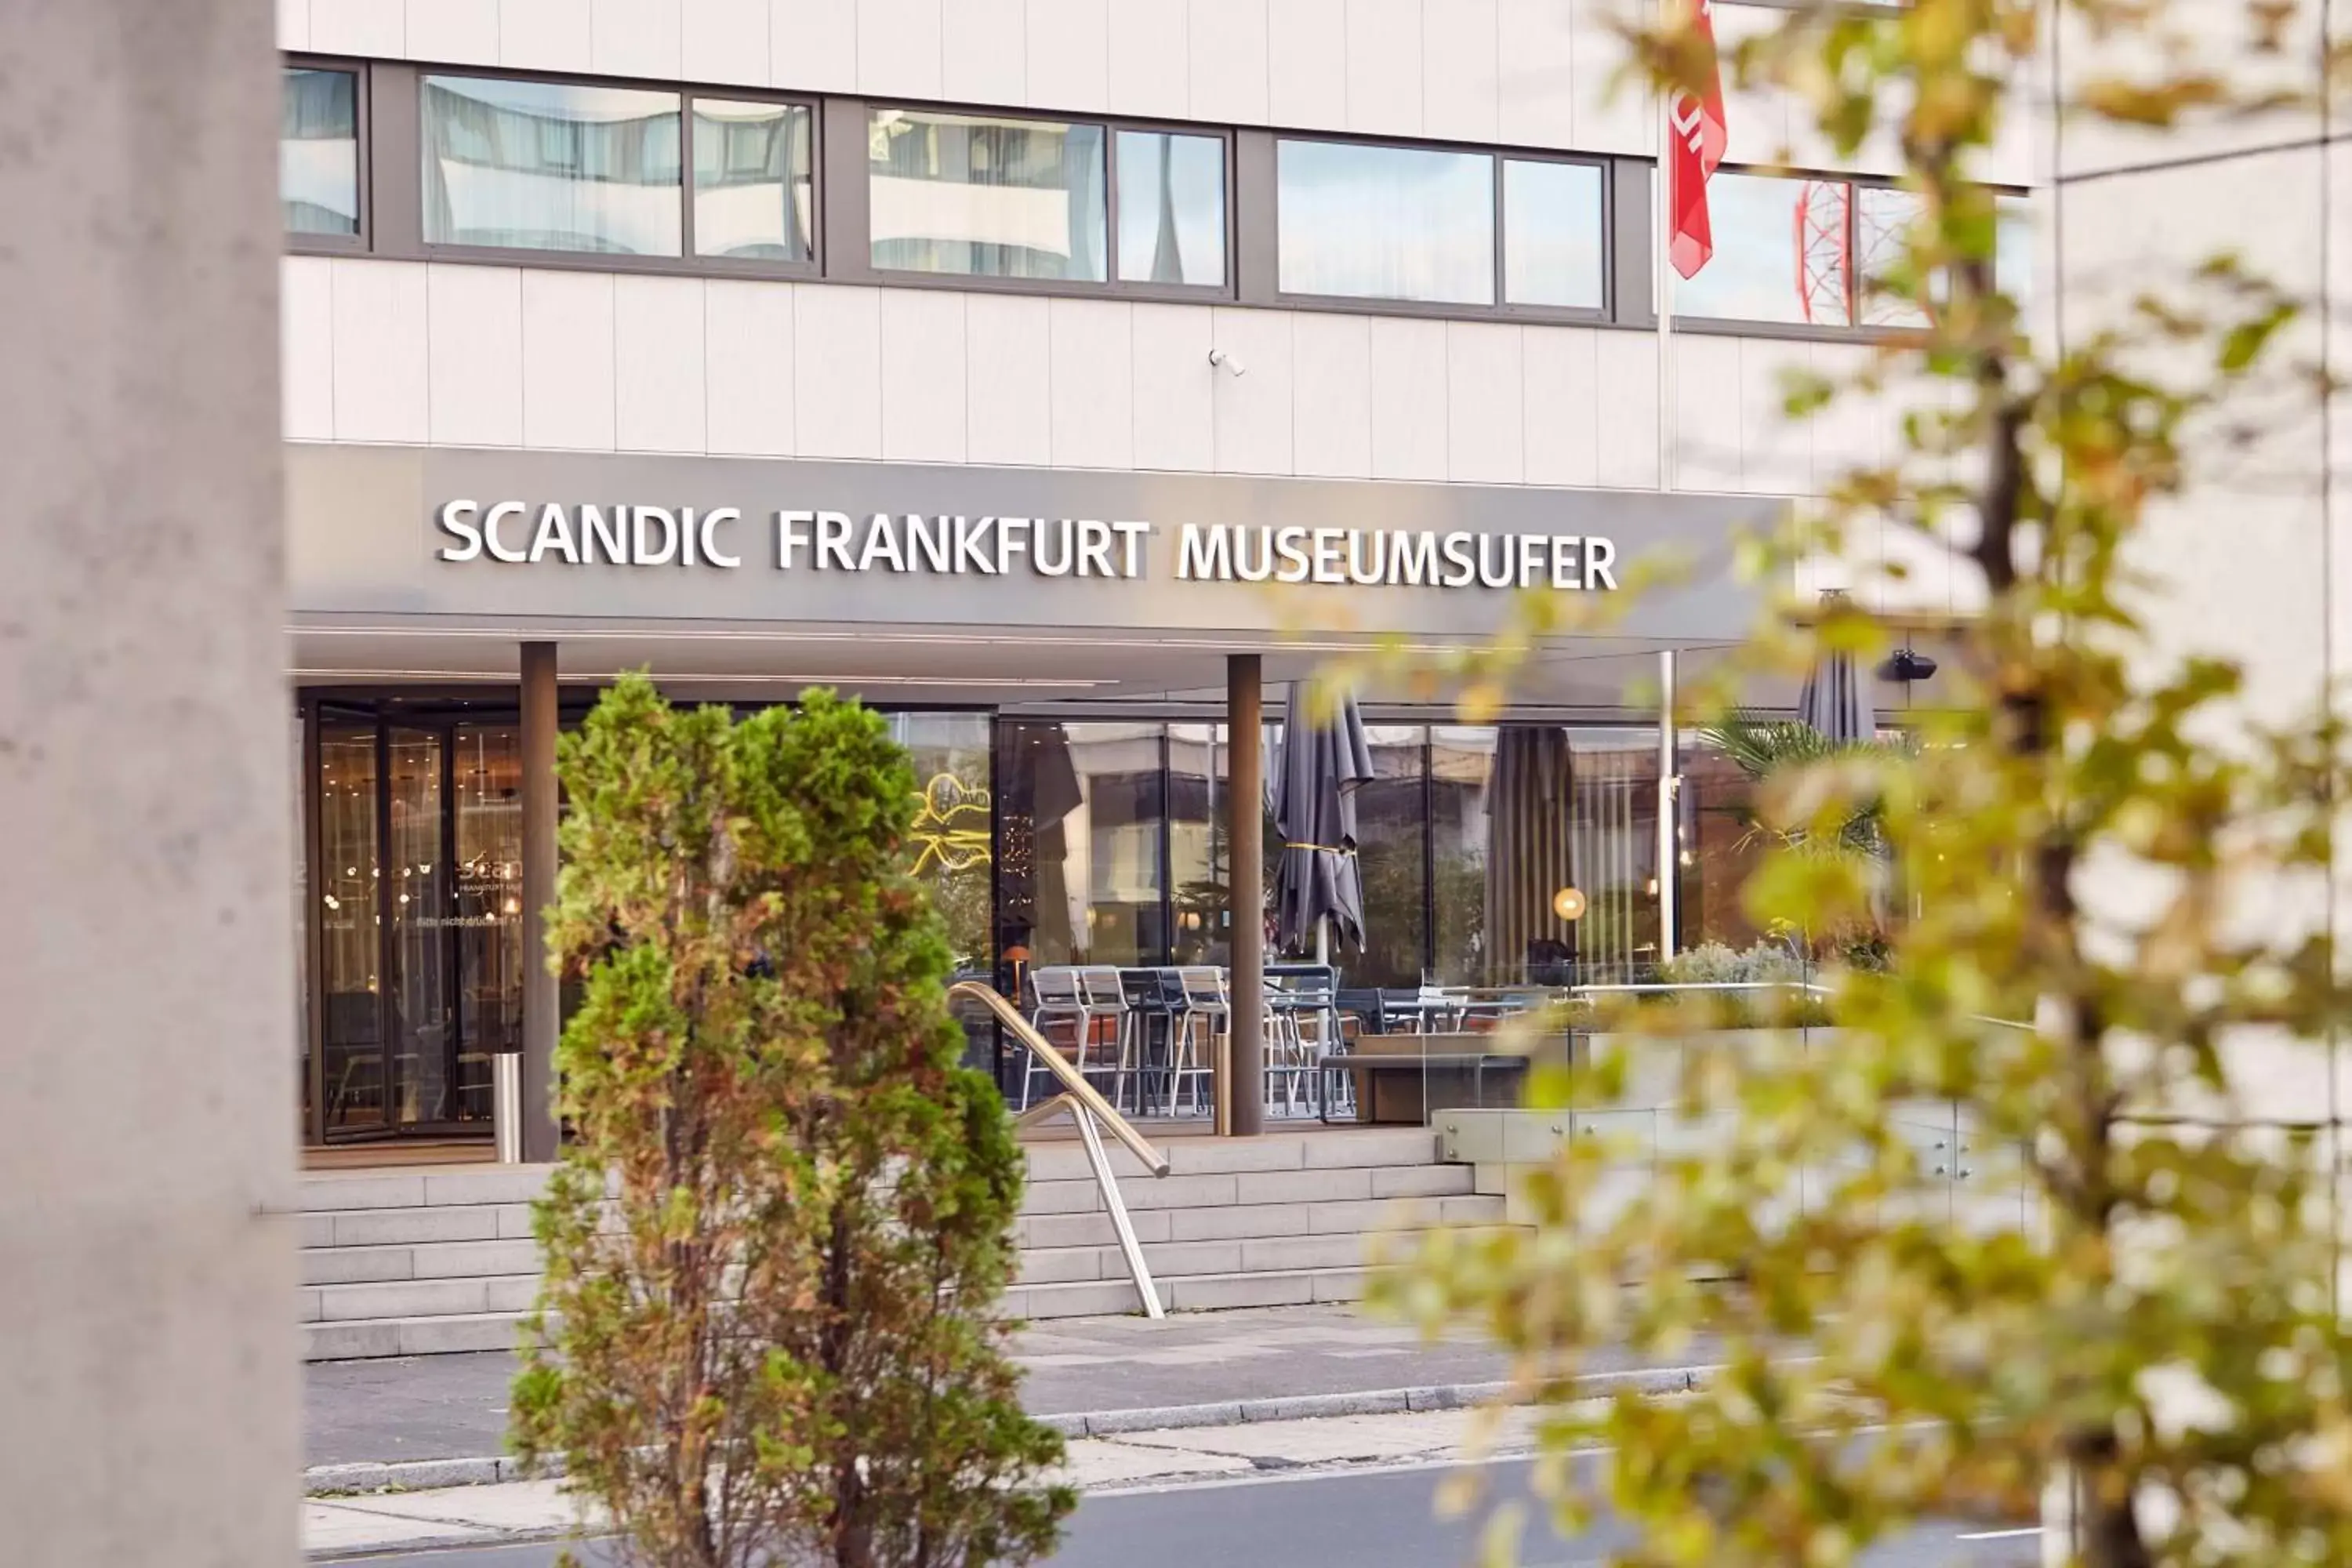 Property building in Scandic Frankfurt Museumsufer